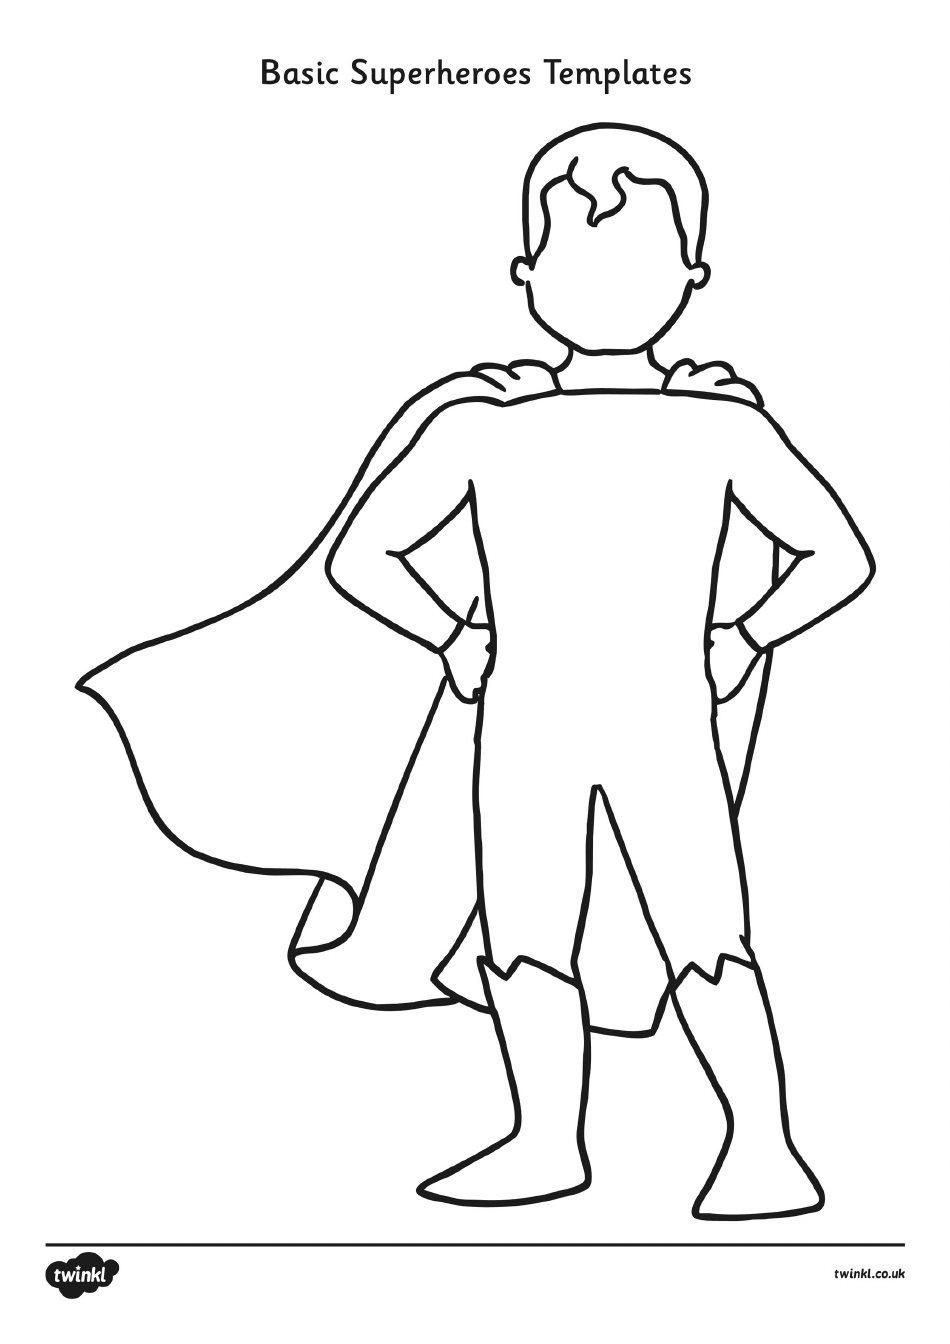 Basic Superhero Templates, Page 1